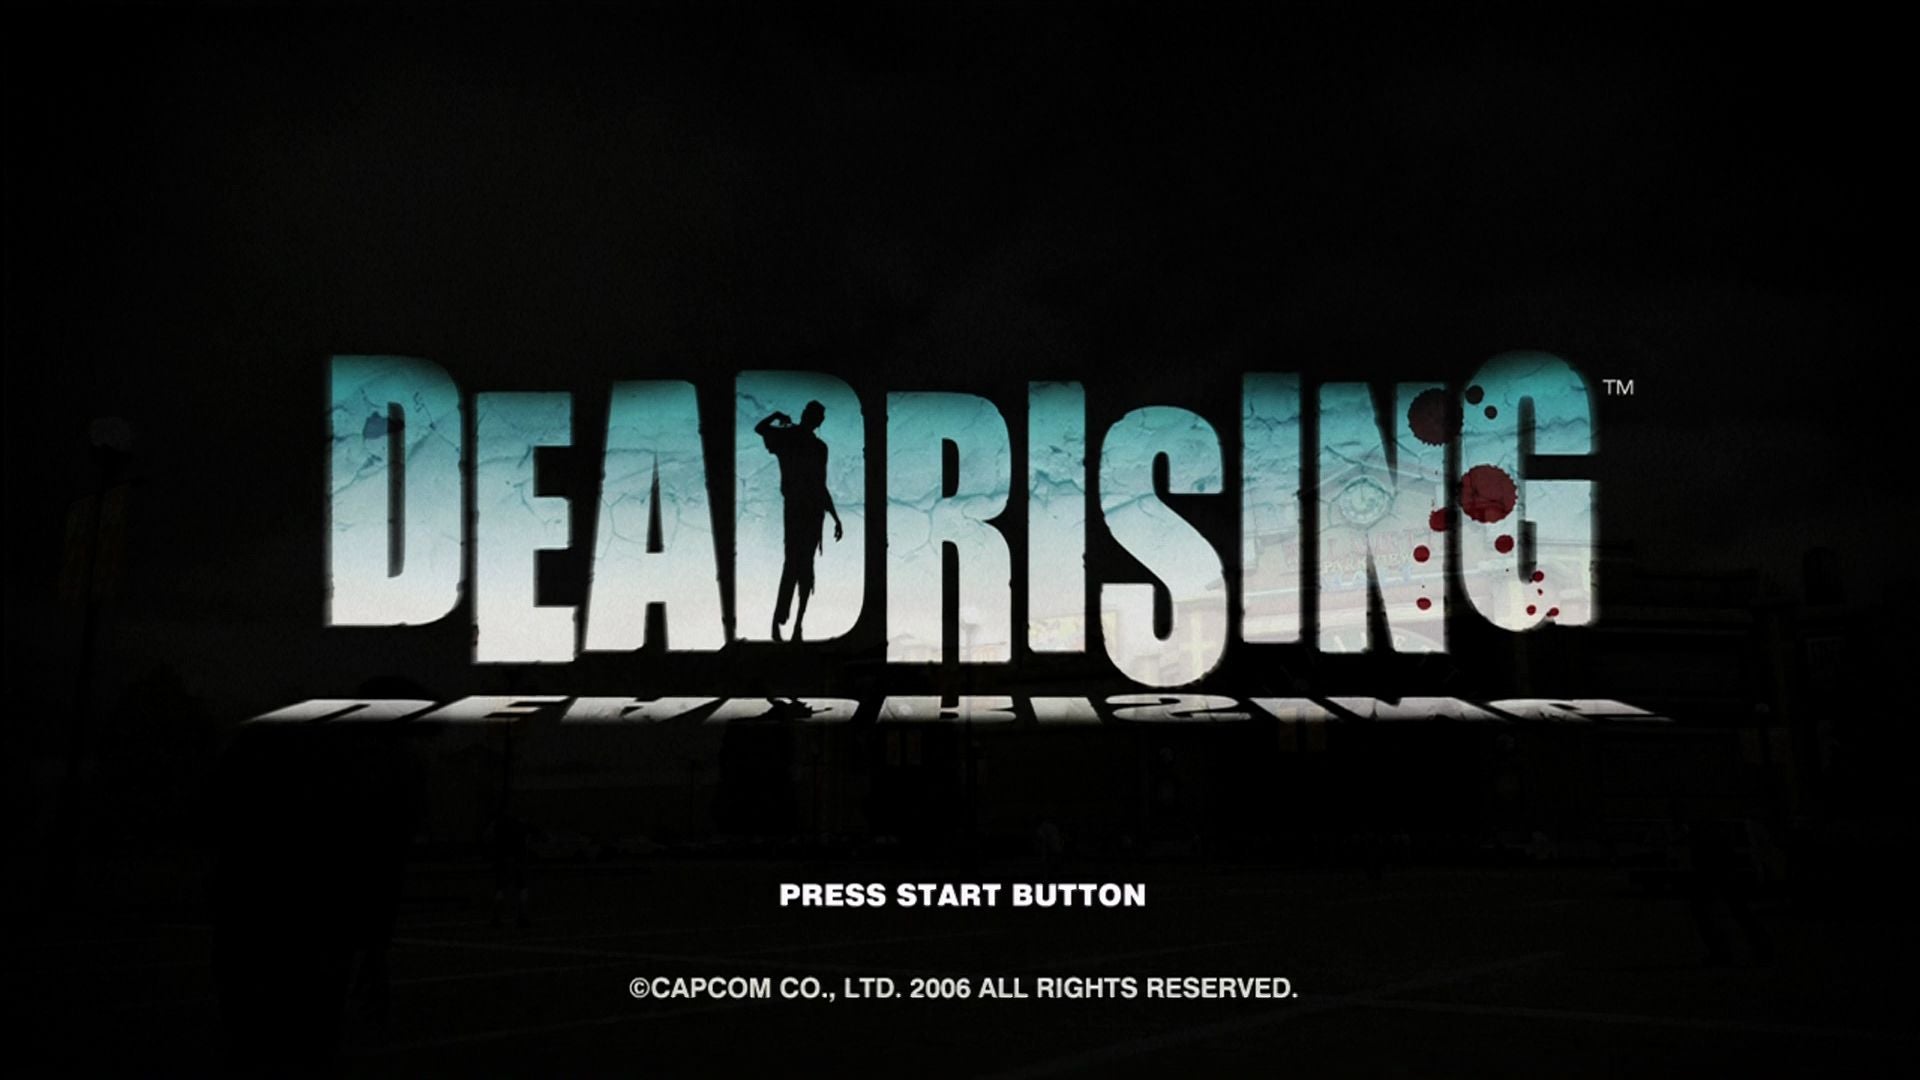 Dead Rising - Microsoft Xbox 360 Game